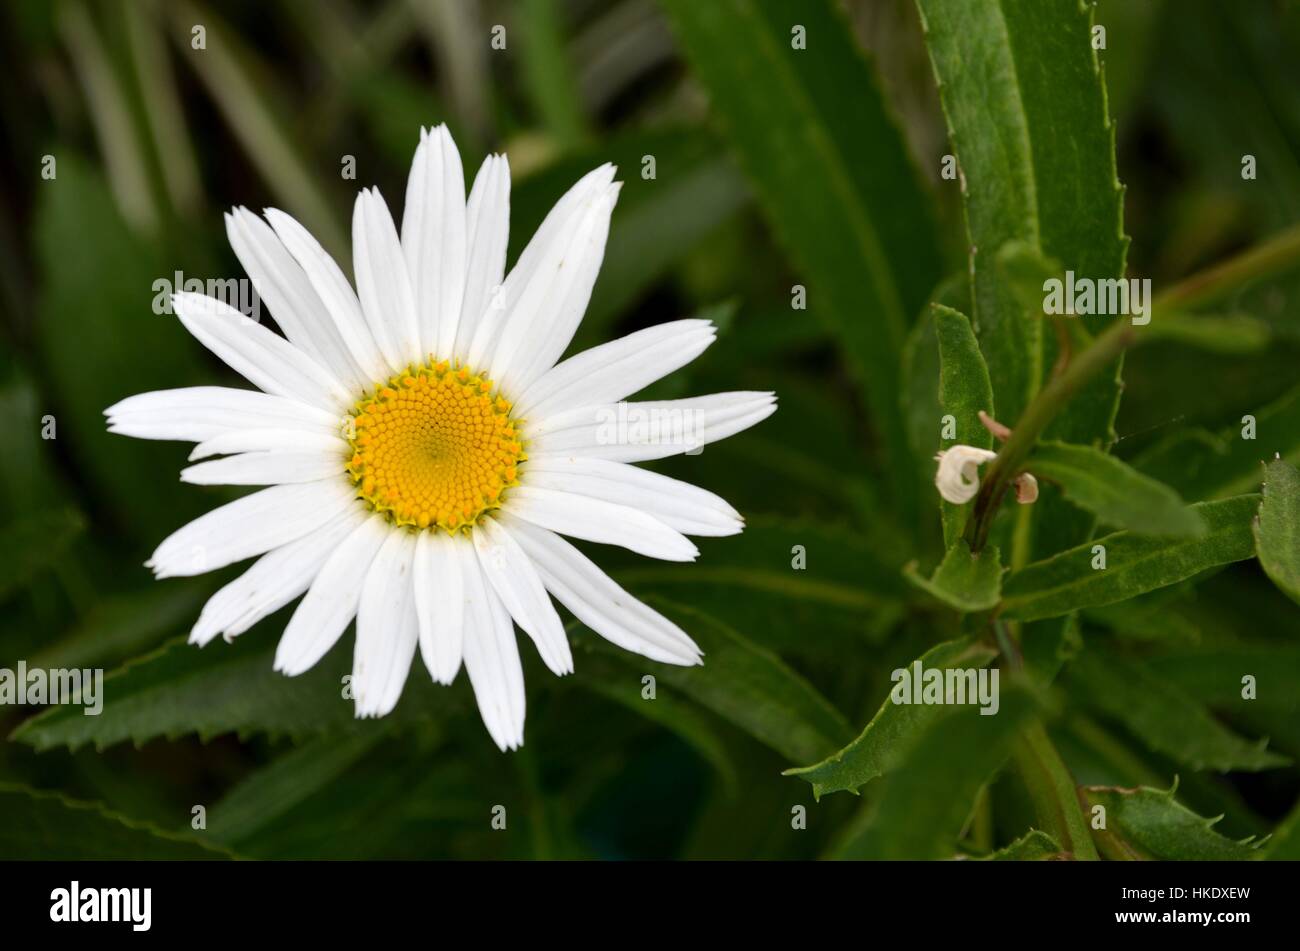 White yellow daisy flower in bloom Stock Photo